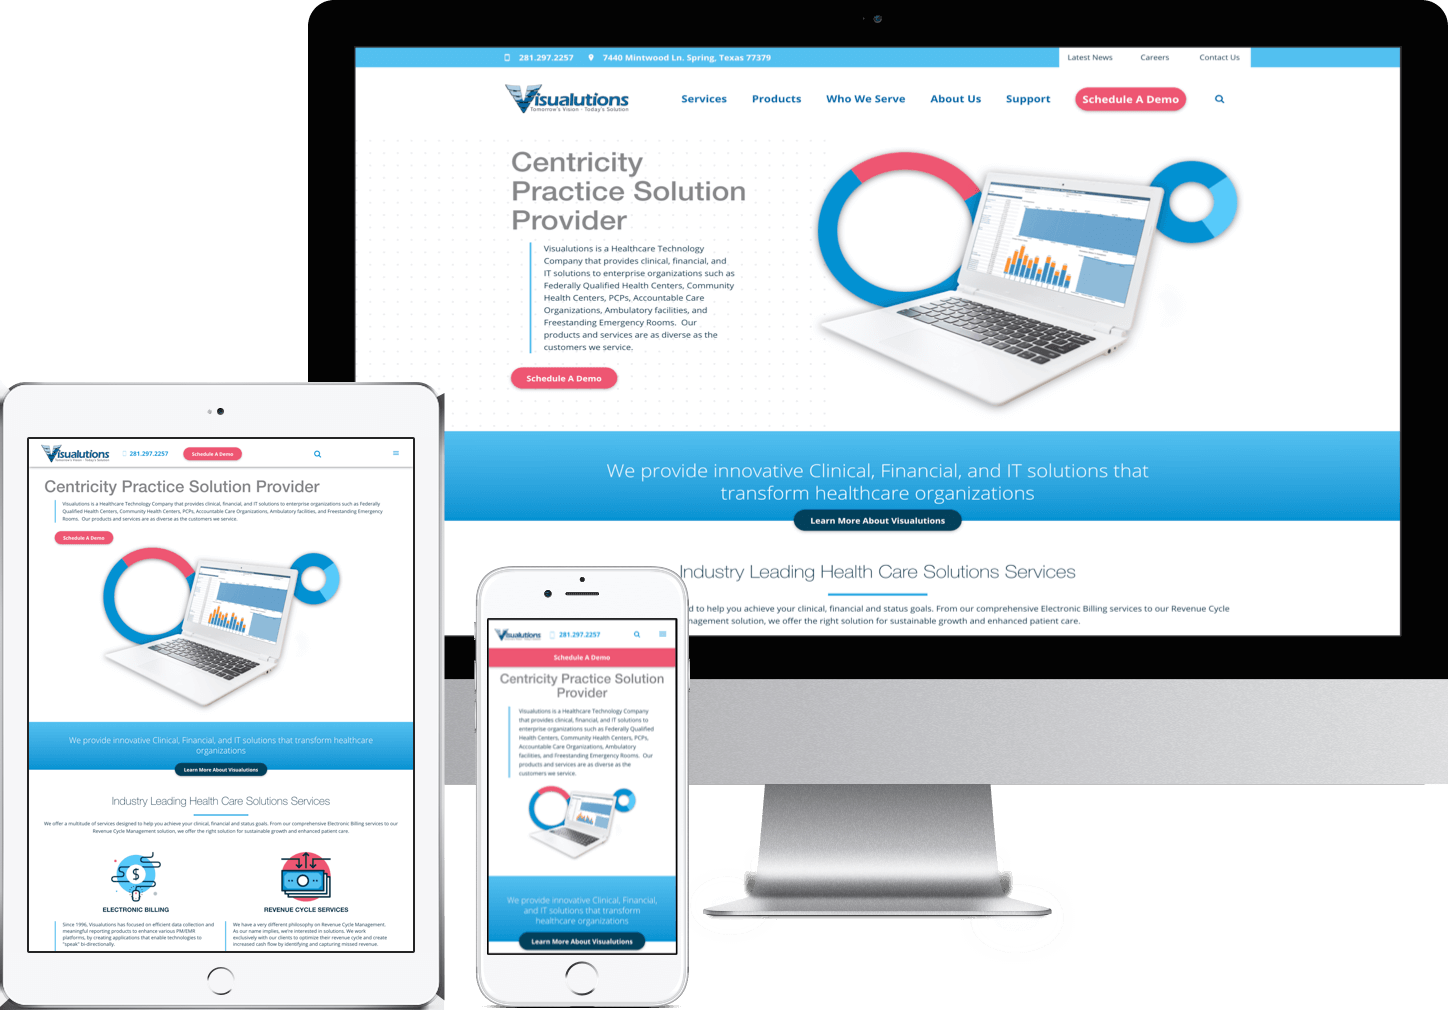 Visualutions, Inc. – WebAward Winner, Outstanding Healthcare Website